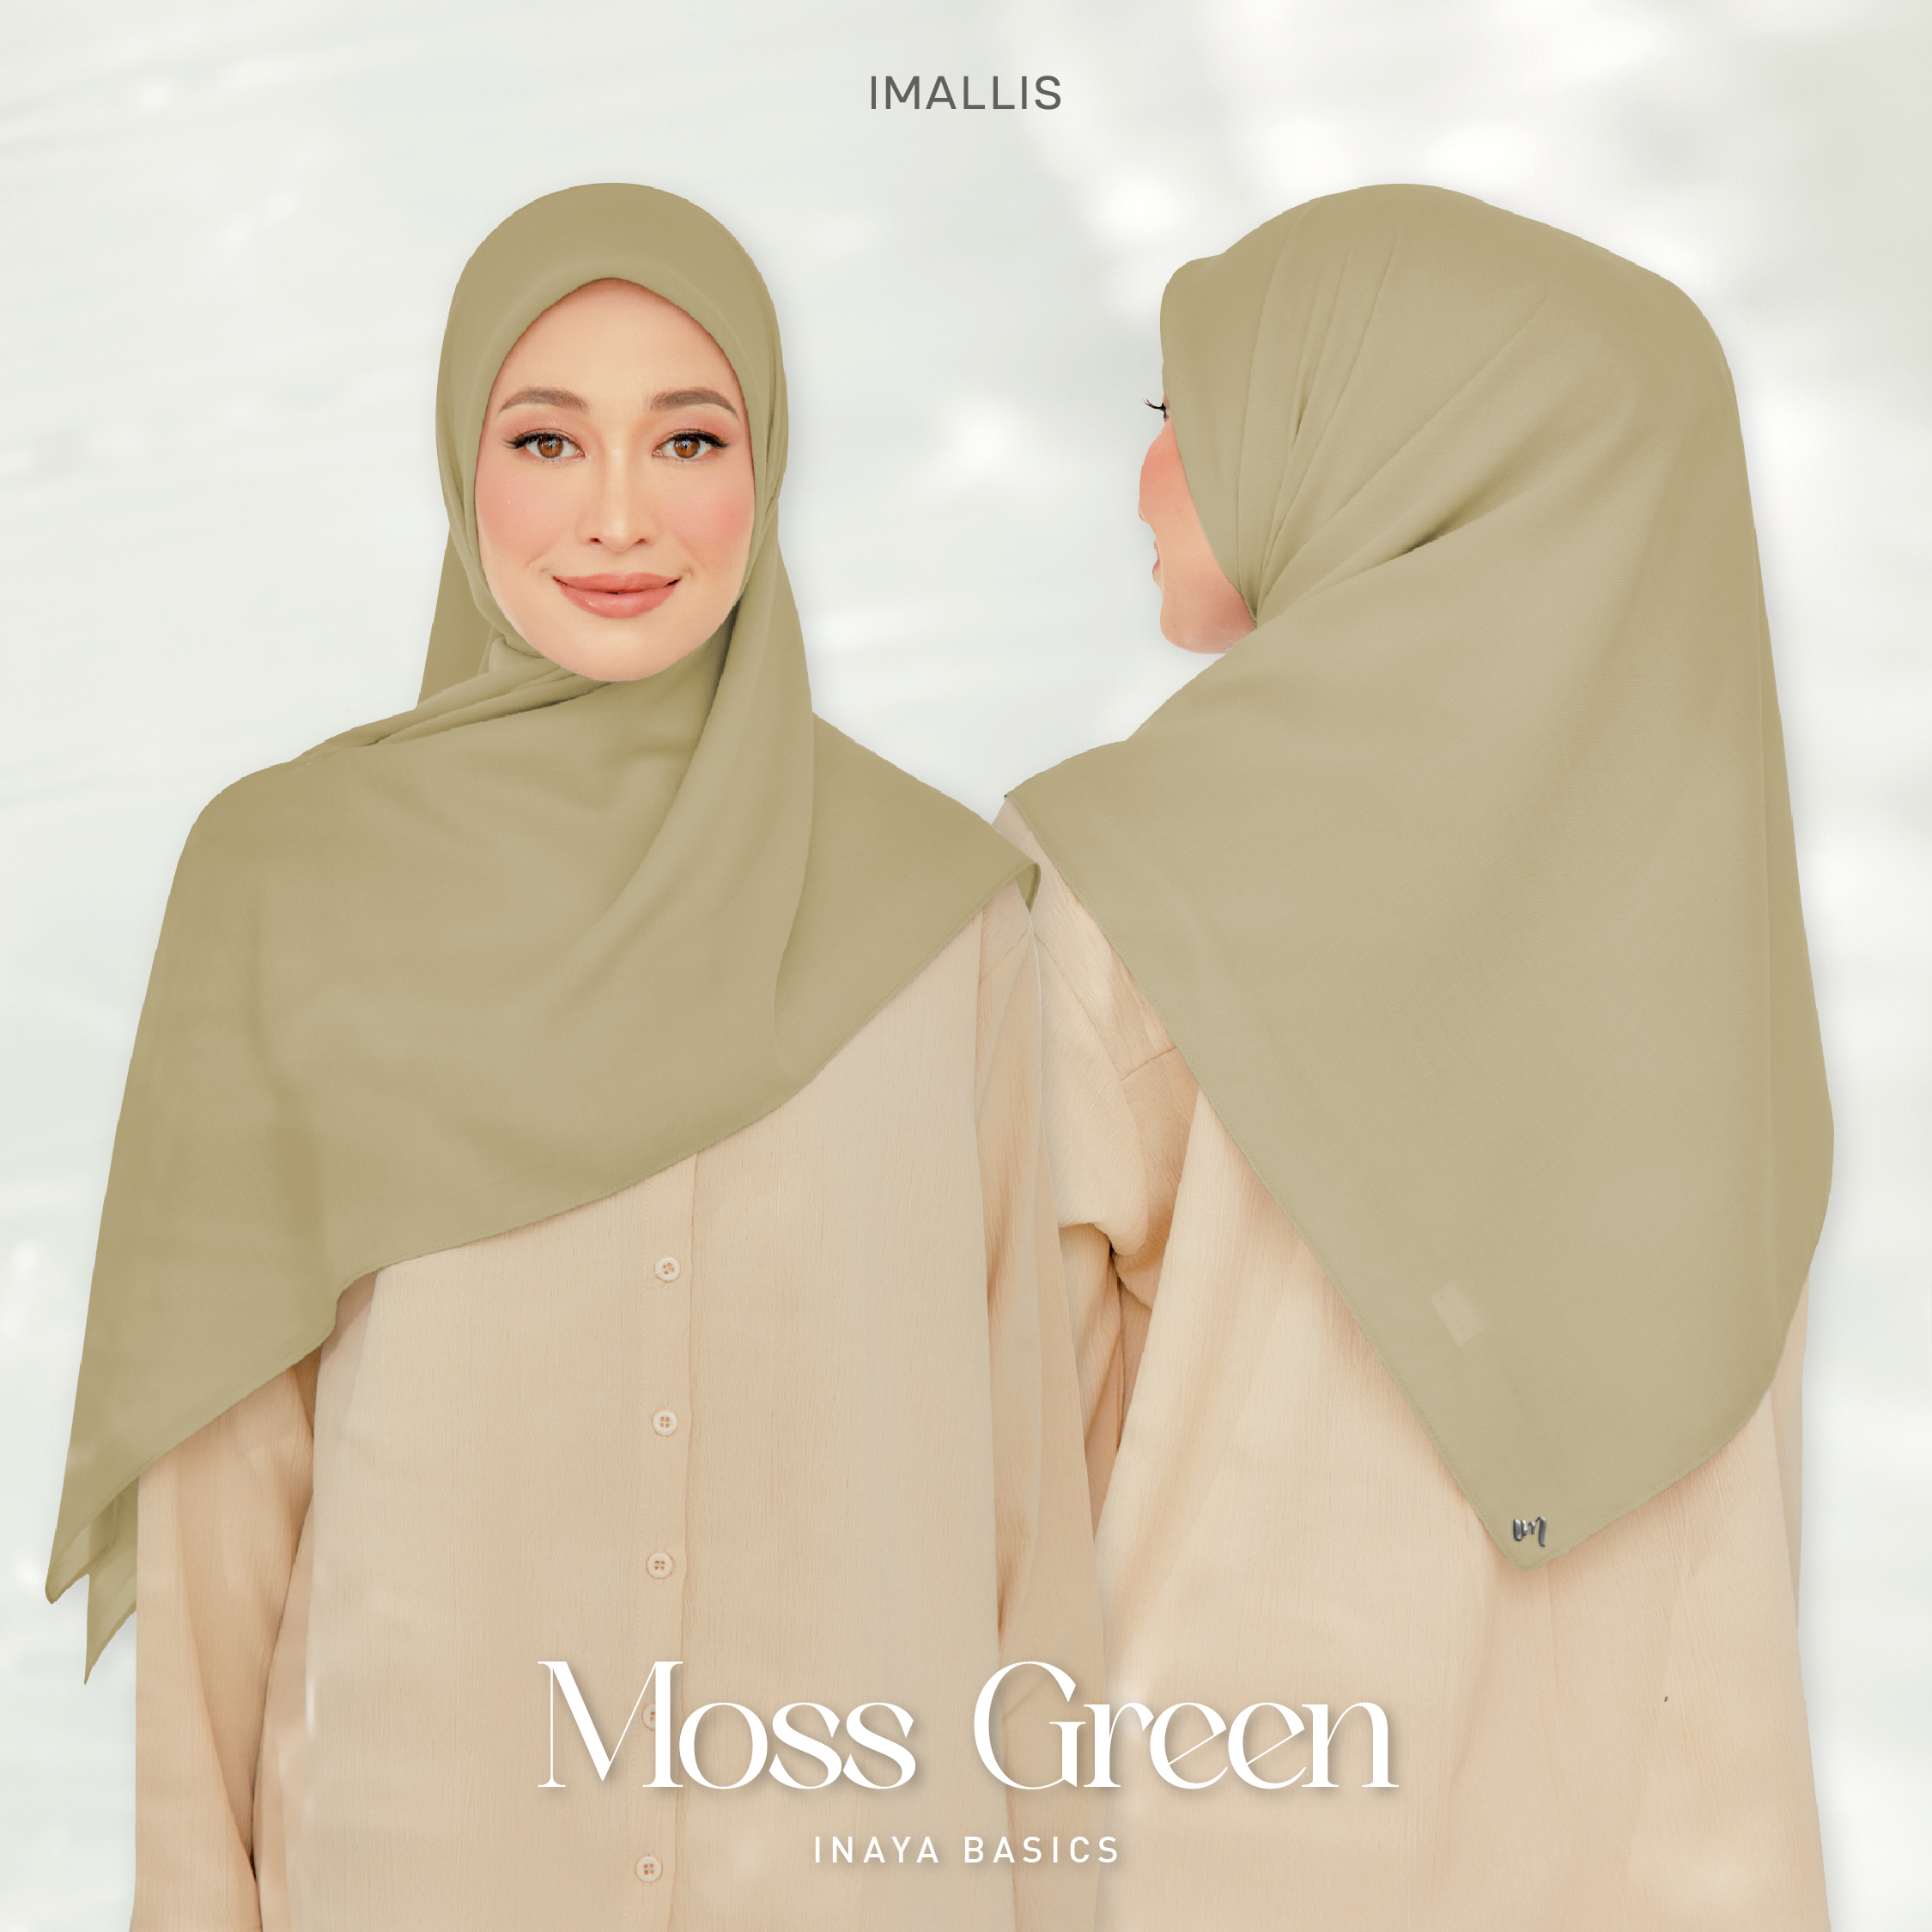 Inaya Basics - Moss Green-01